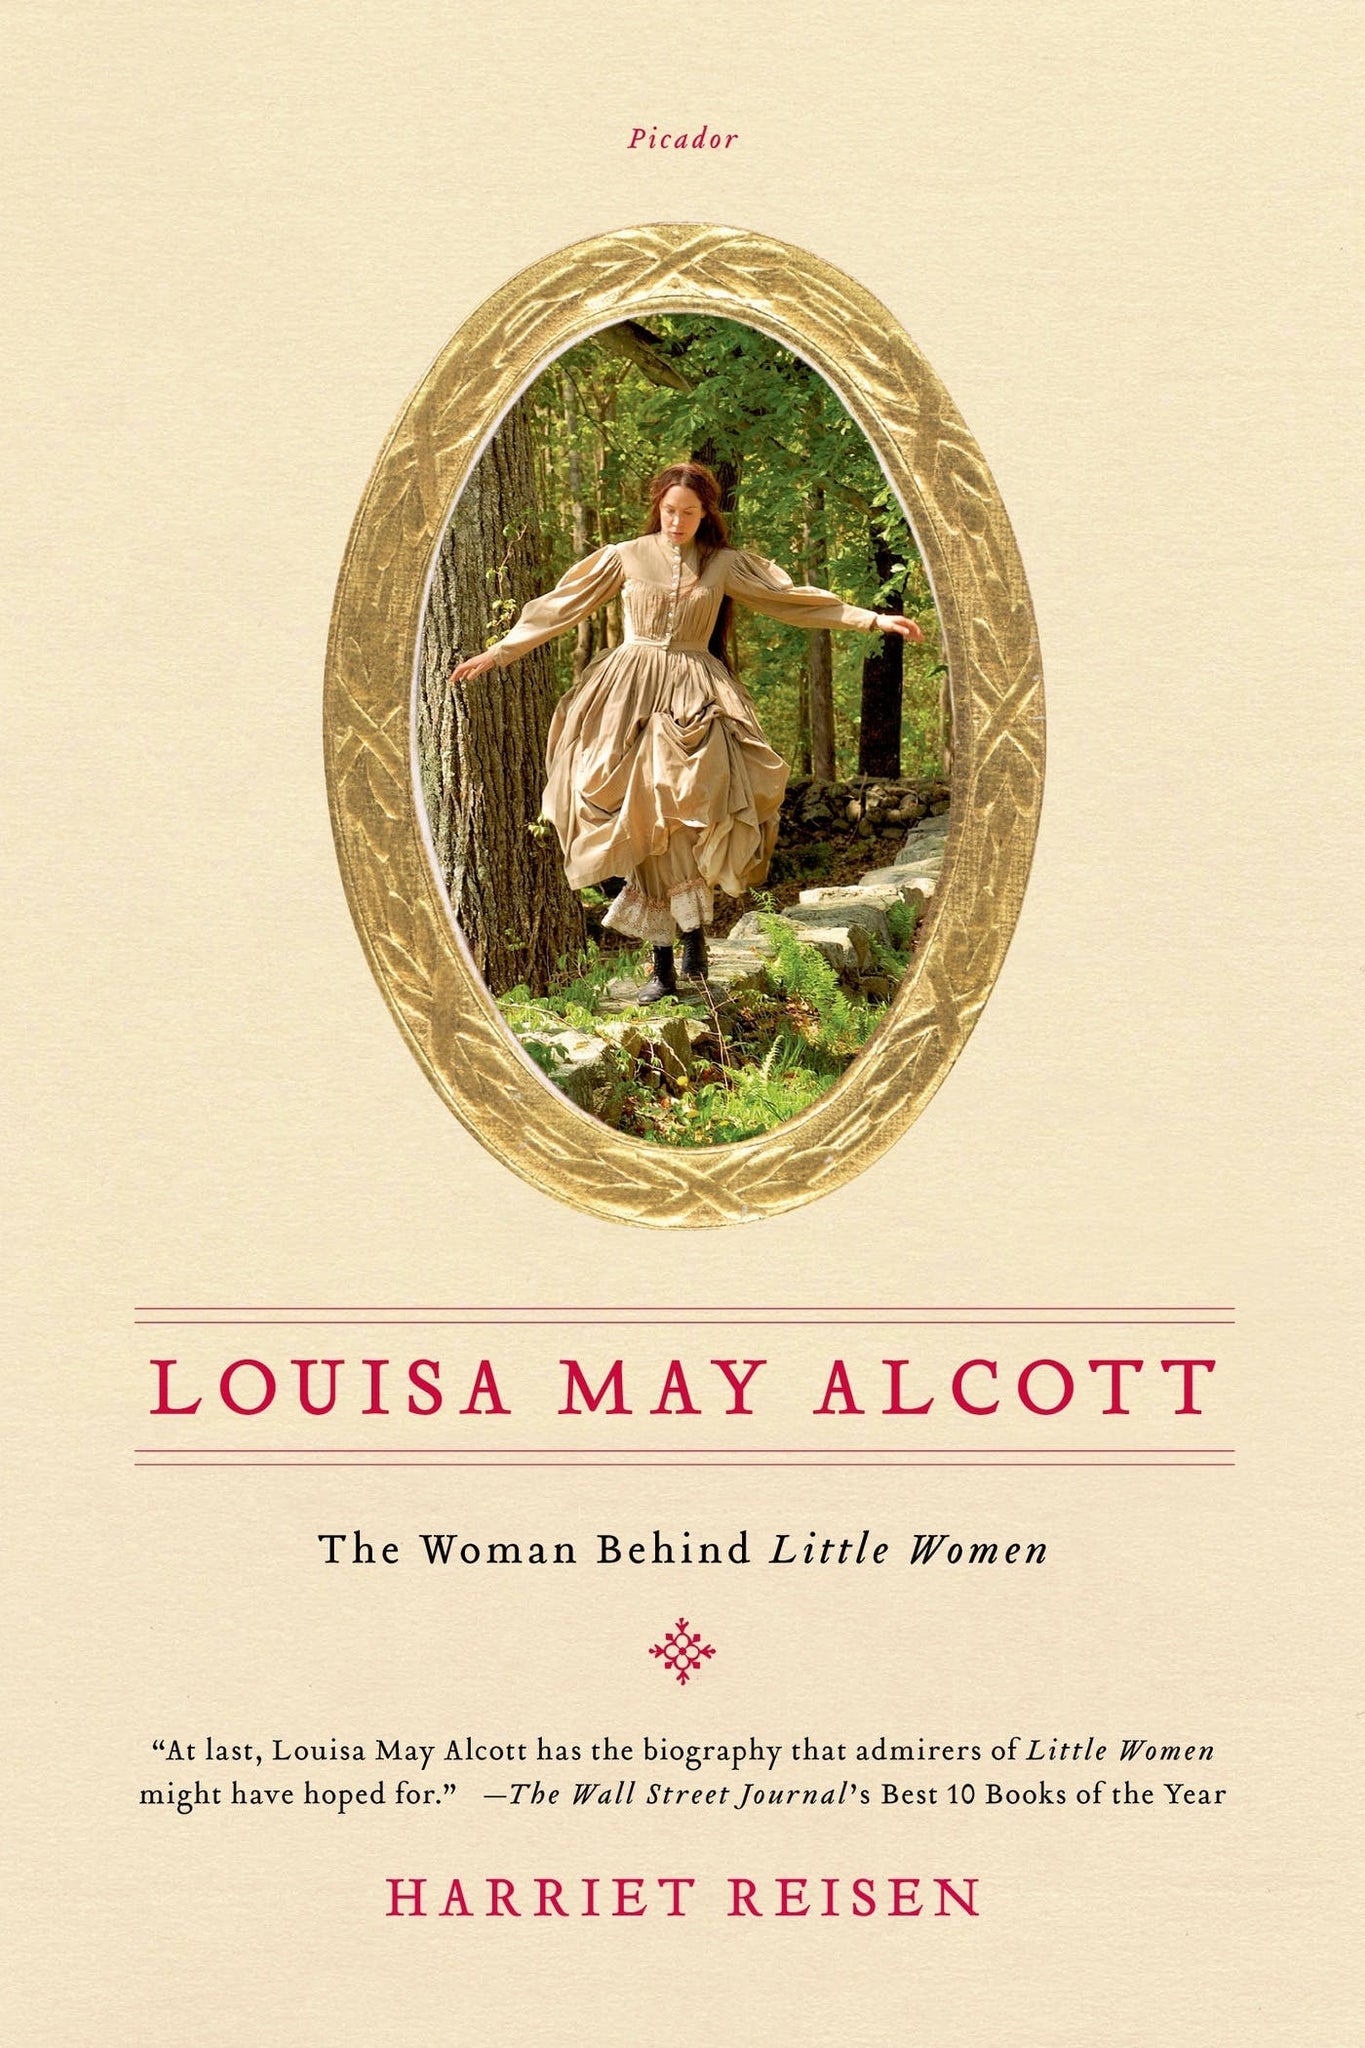 Louisa May Alcott: The Woman Behind Little Women